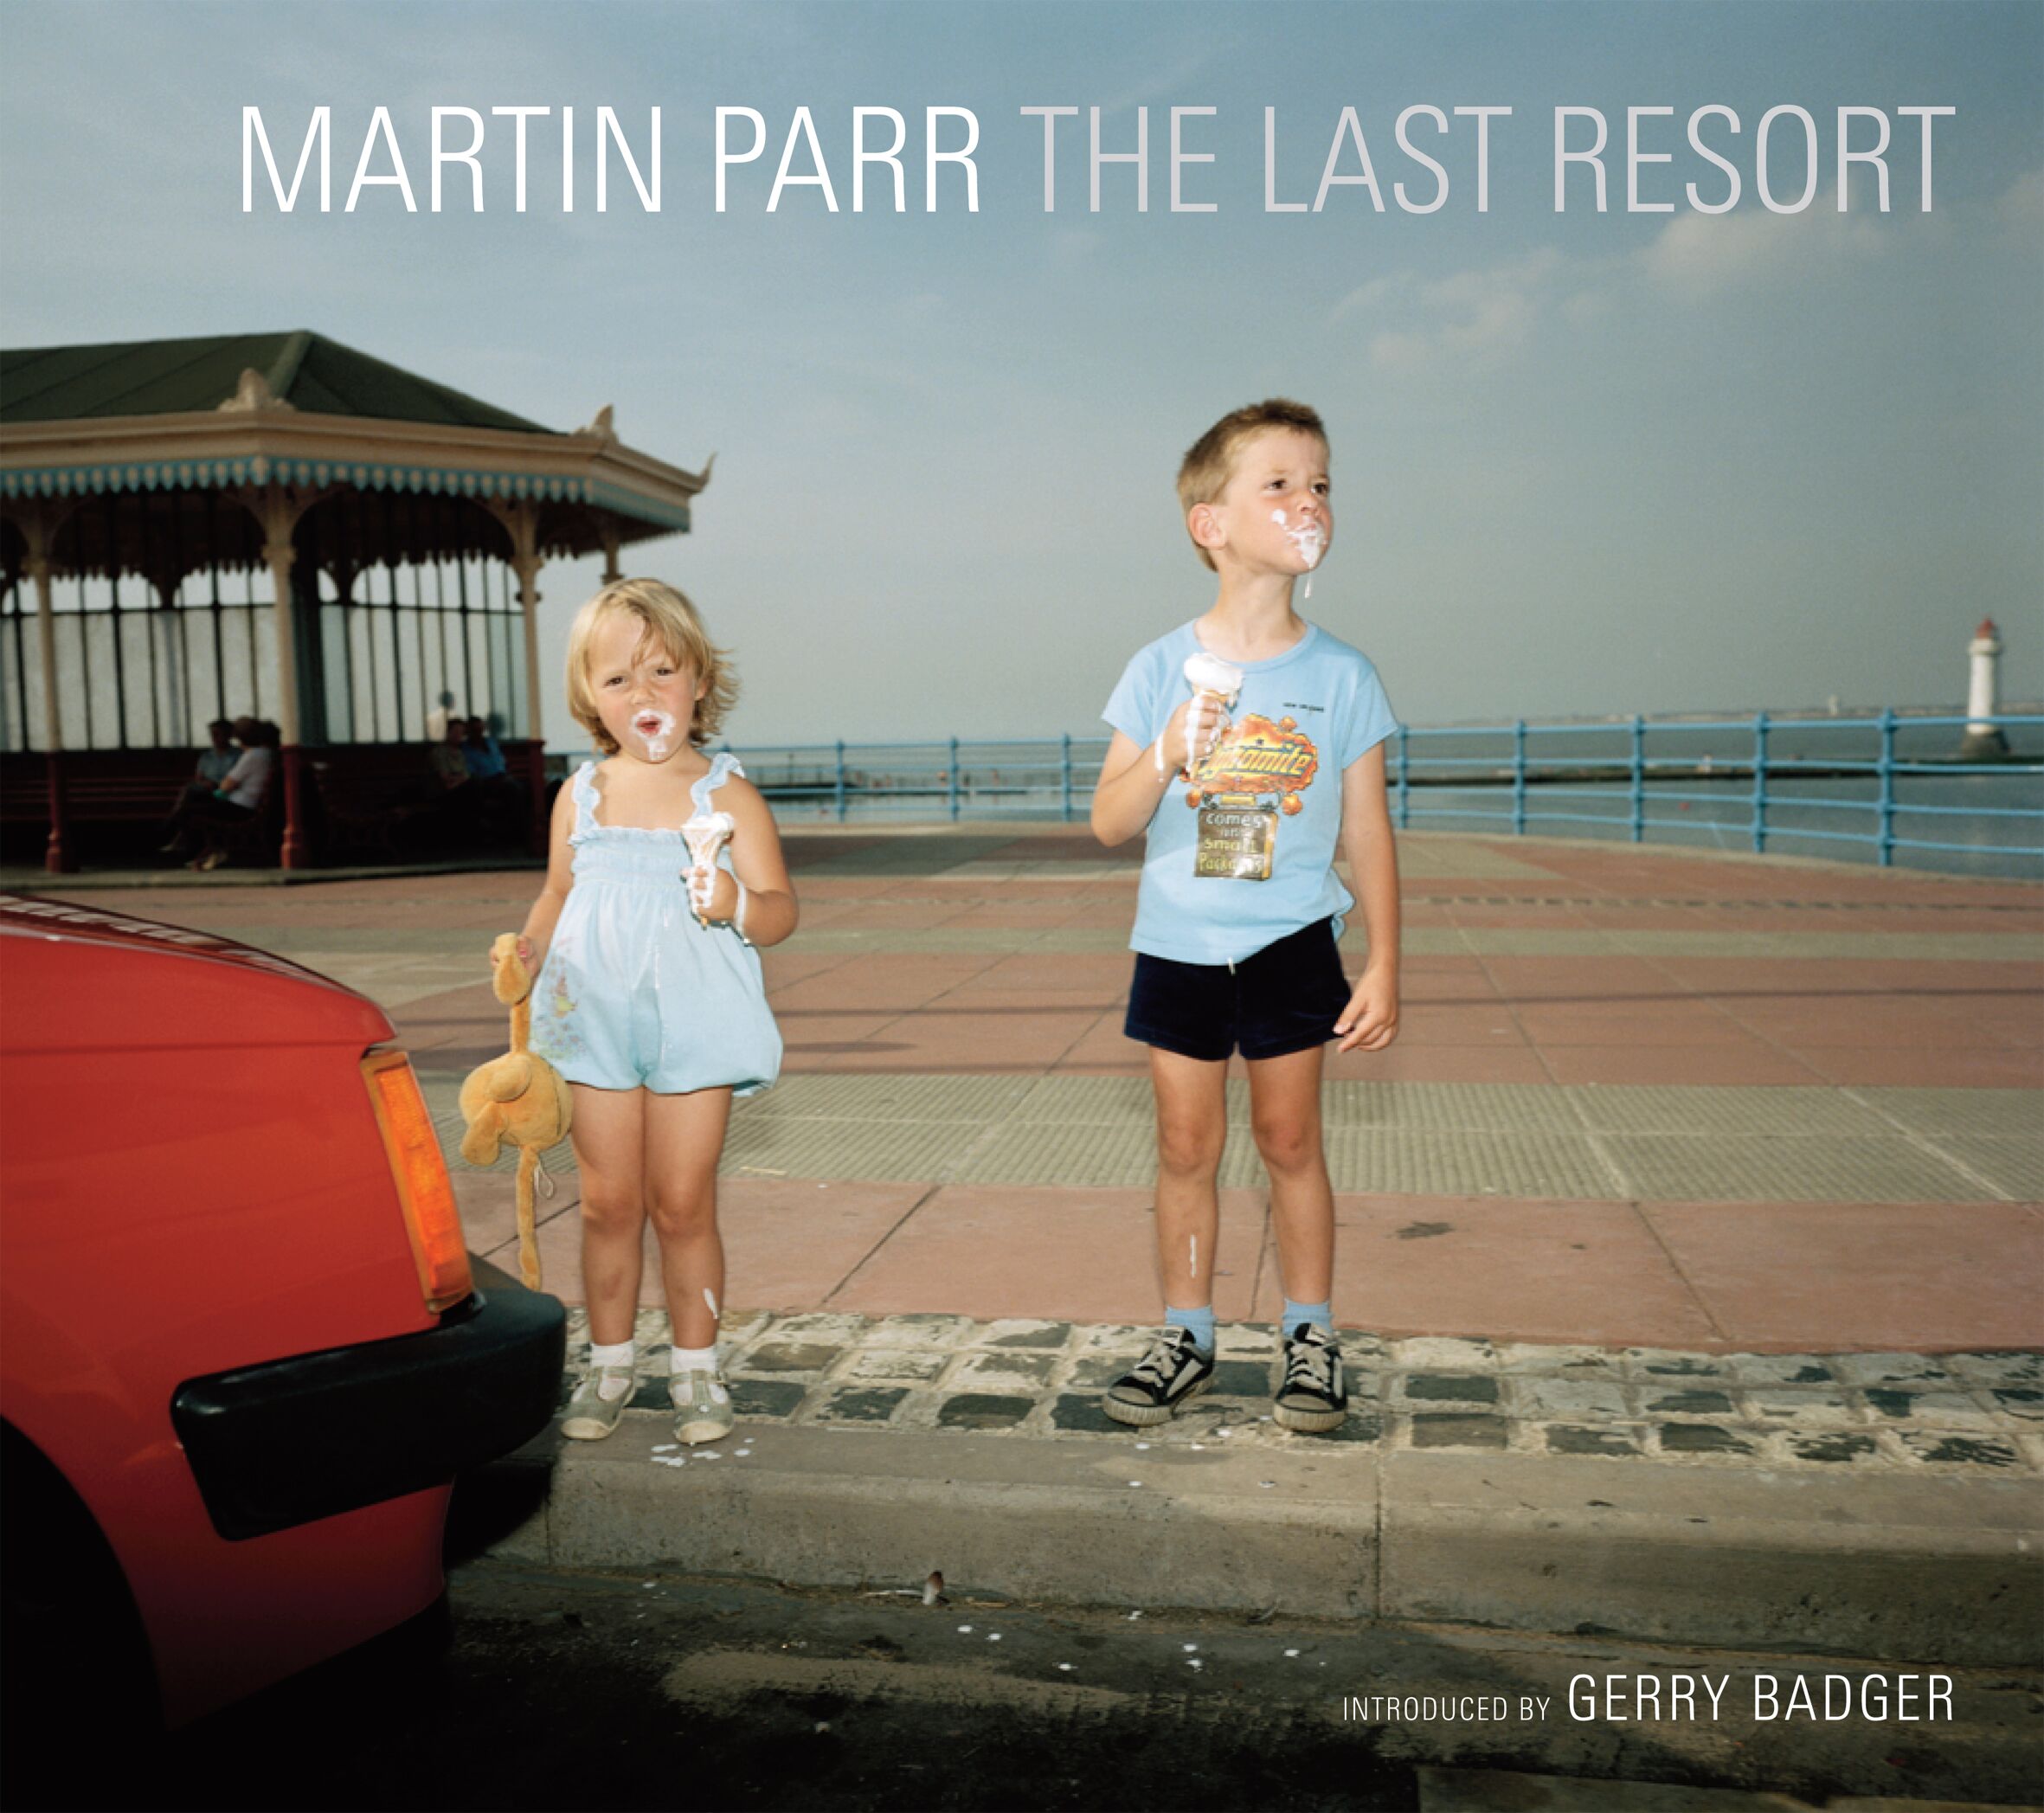 The Last Resort © Martin Parr and Magnum Photos